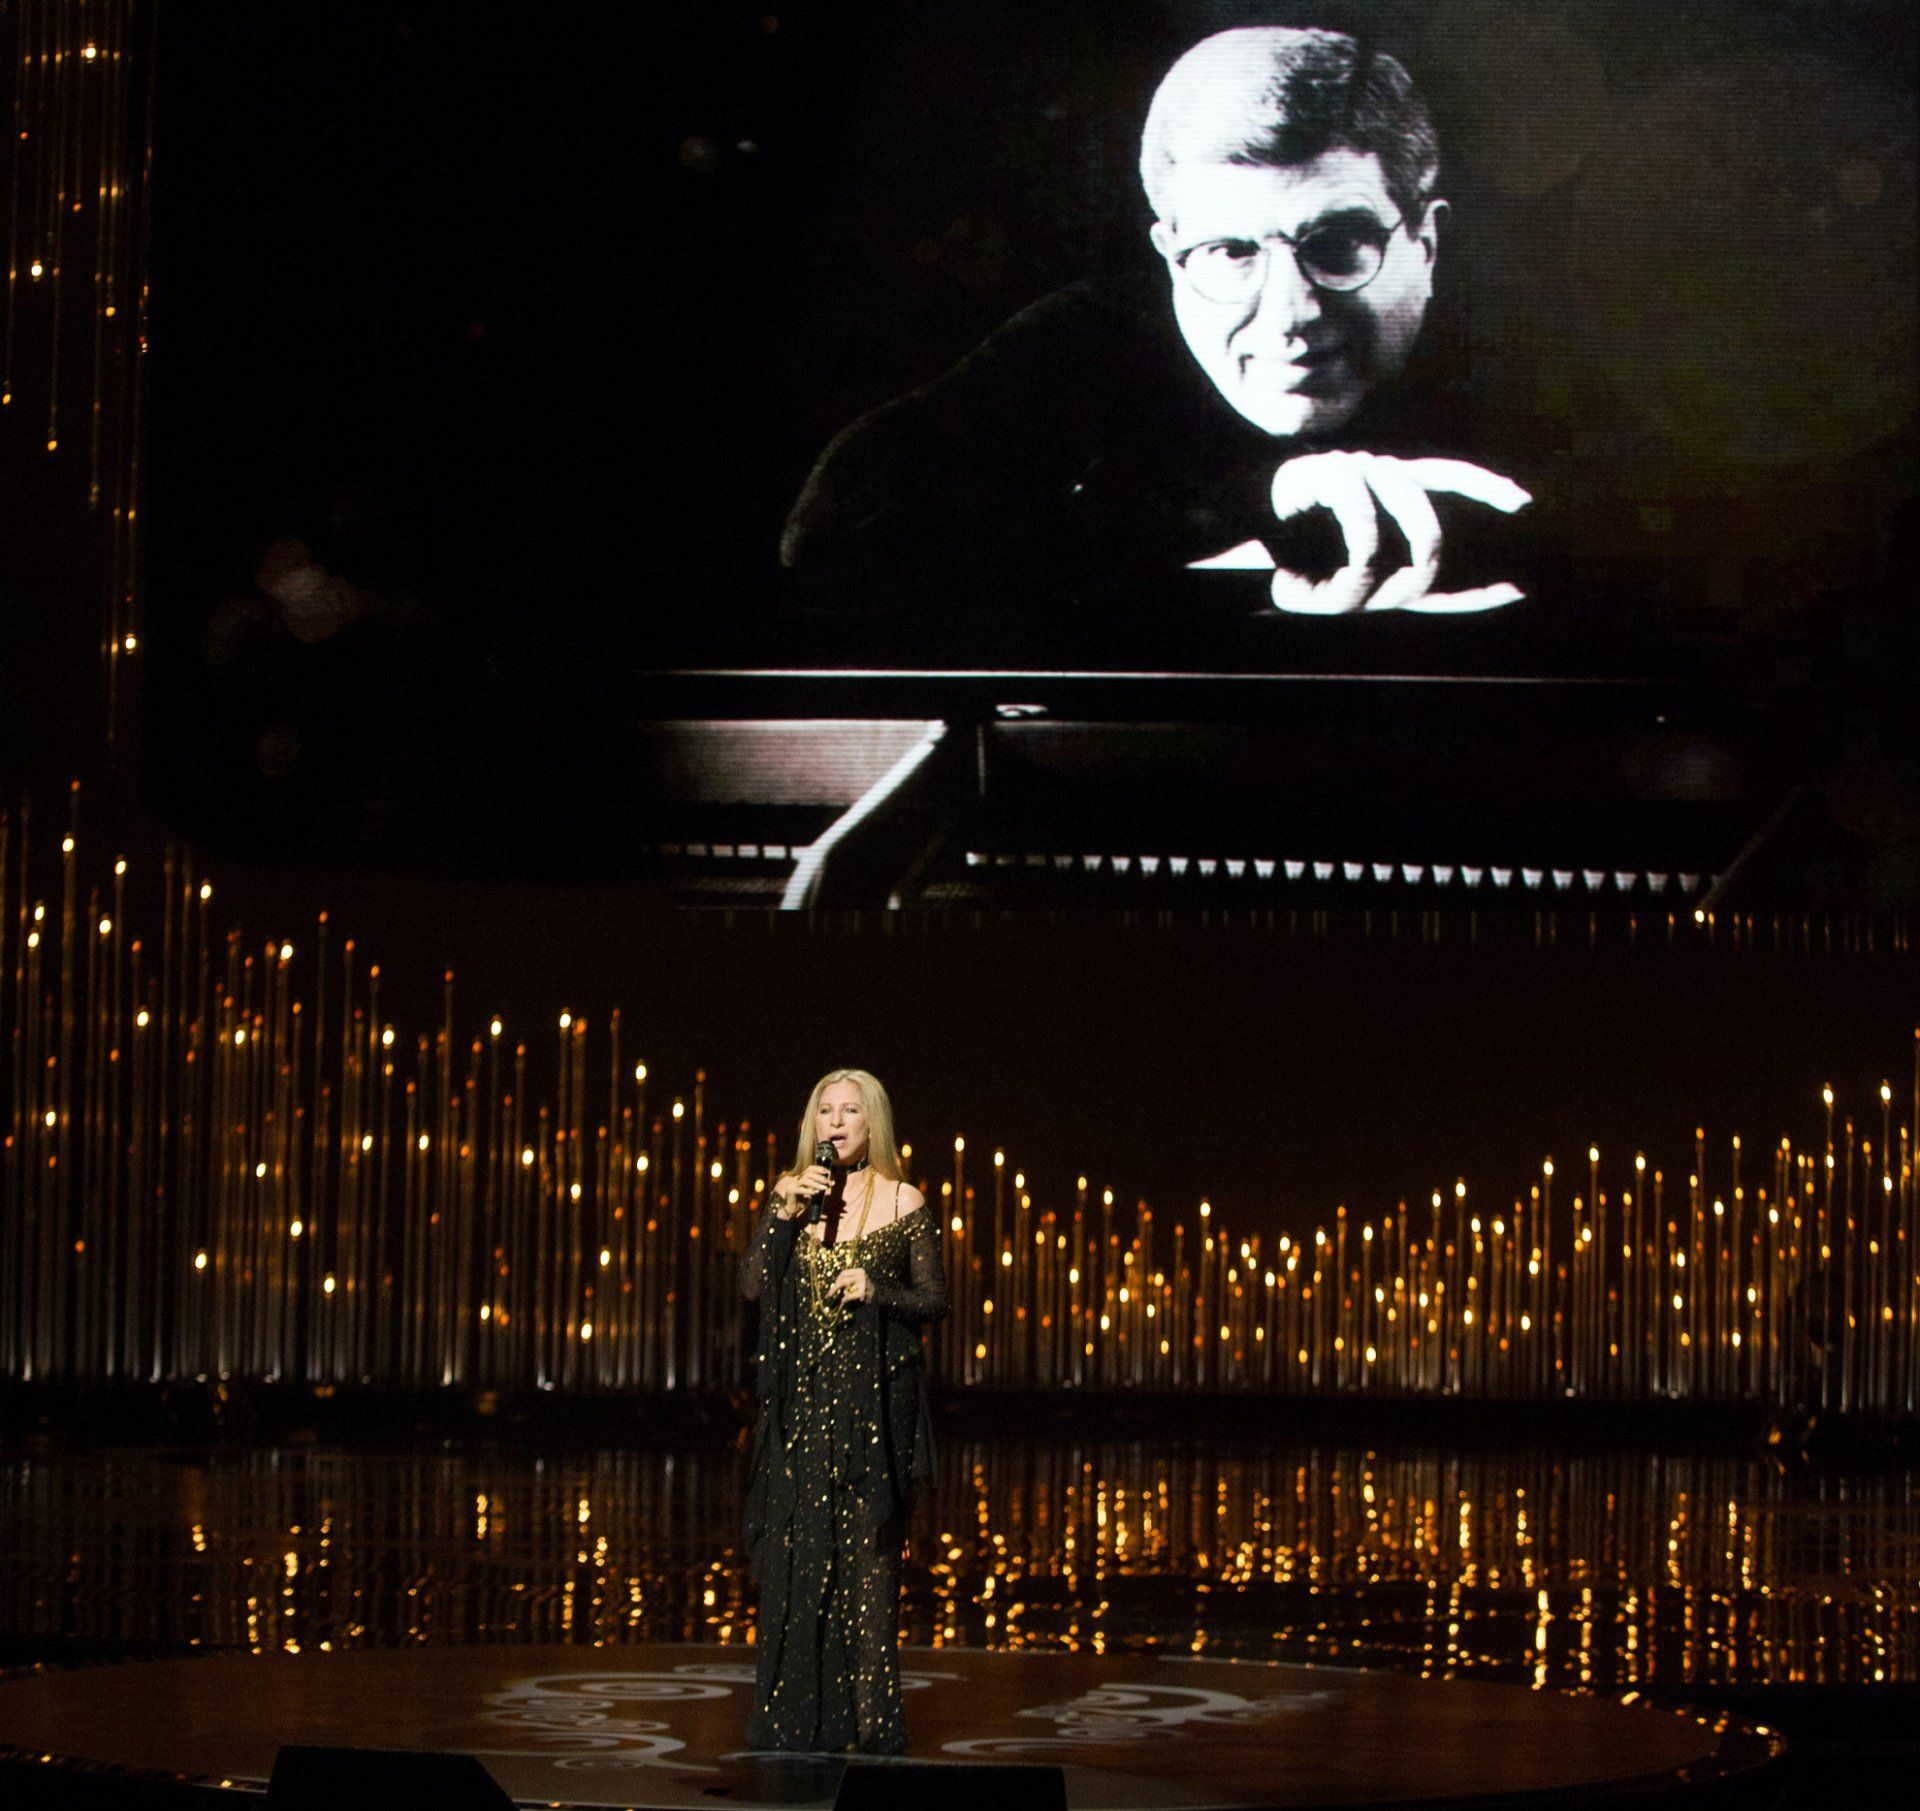 Streisand sings with Hamlisch on screen behind her.